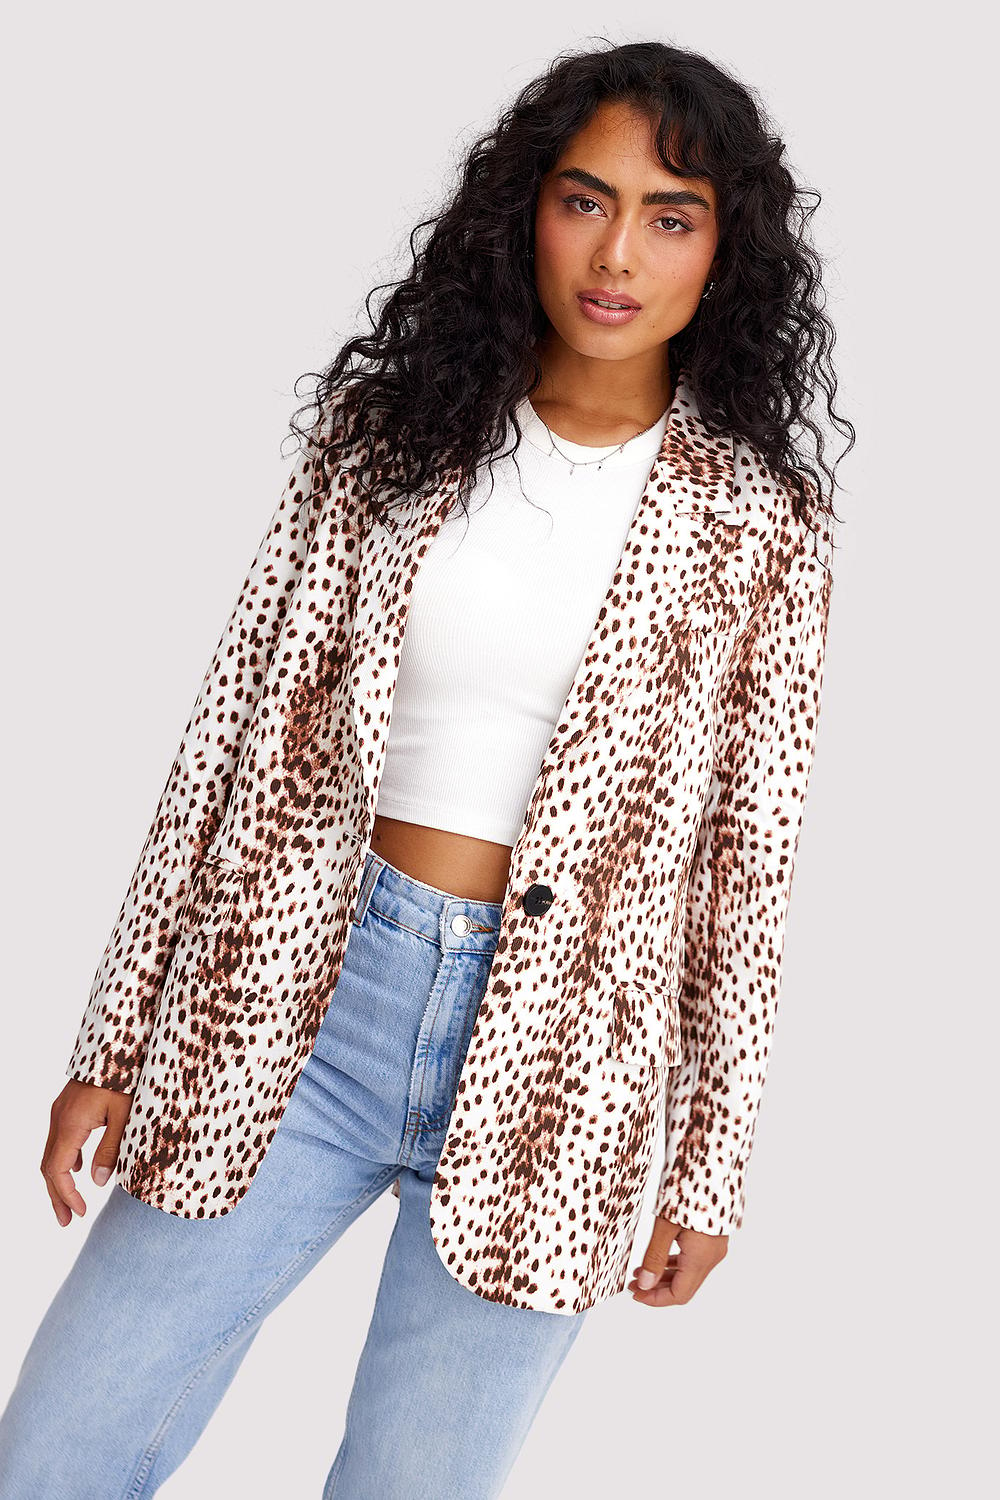 Beige blazer with leopard print